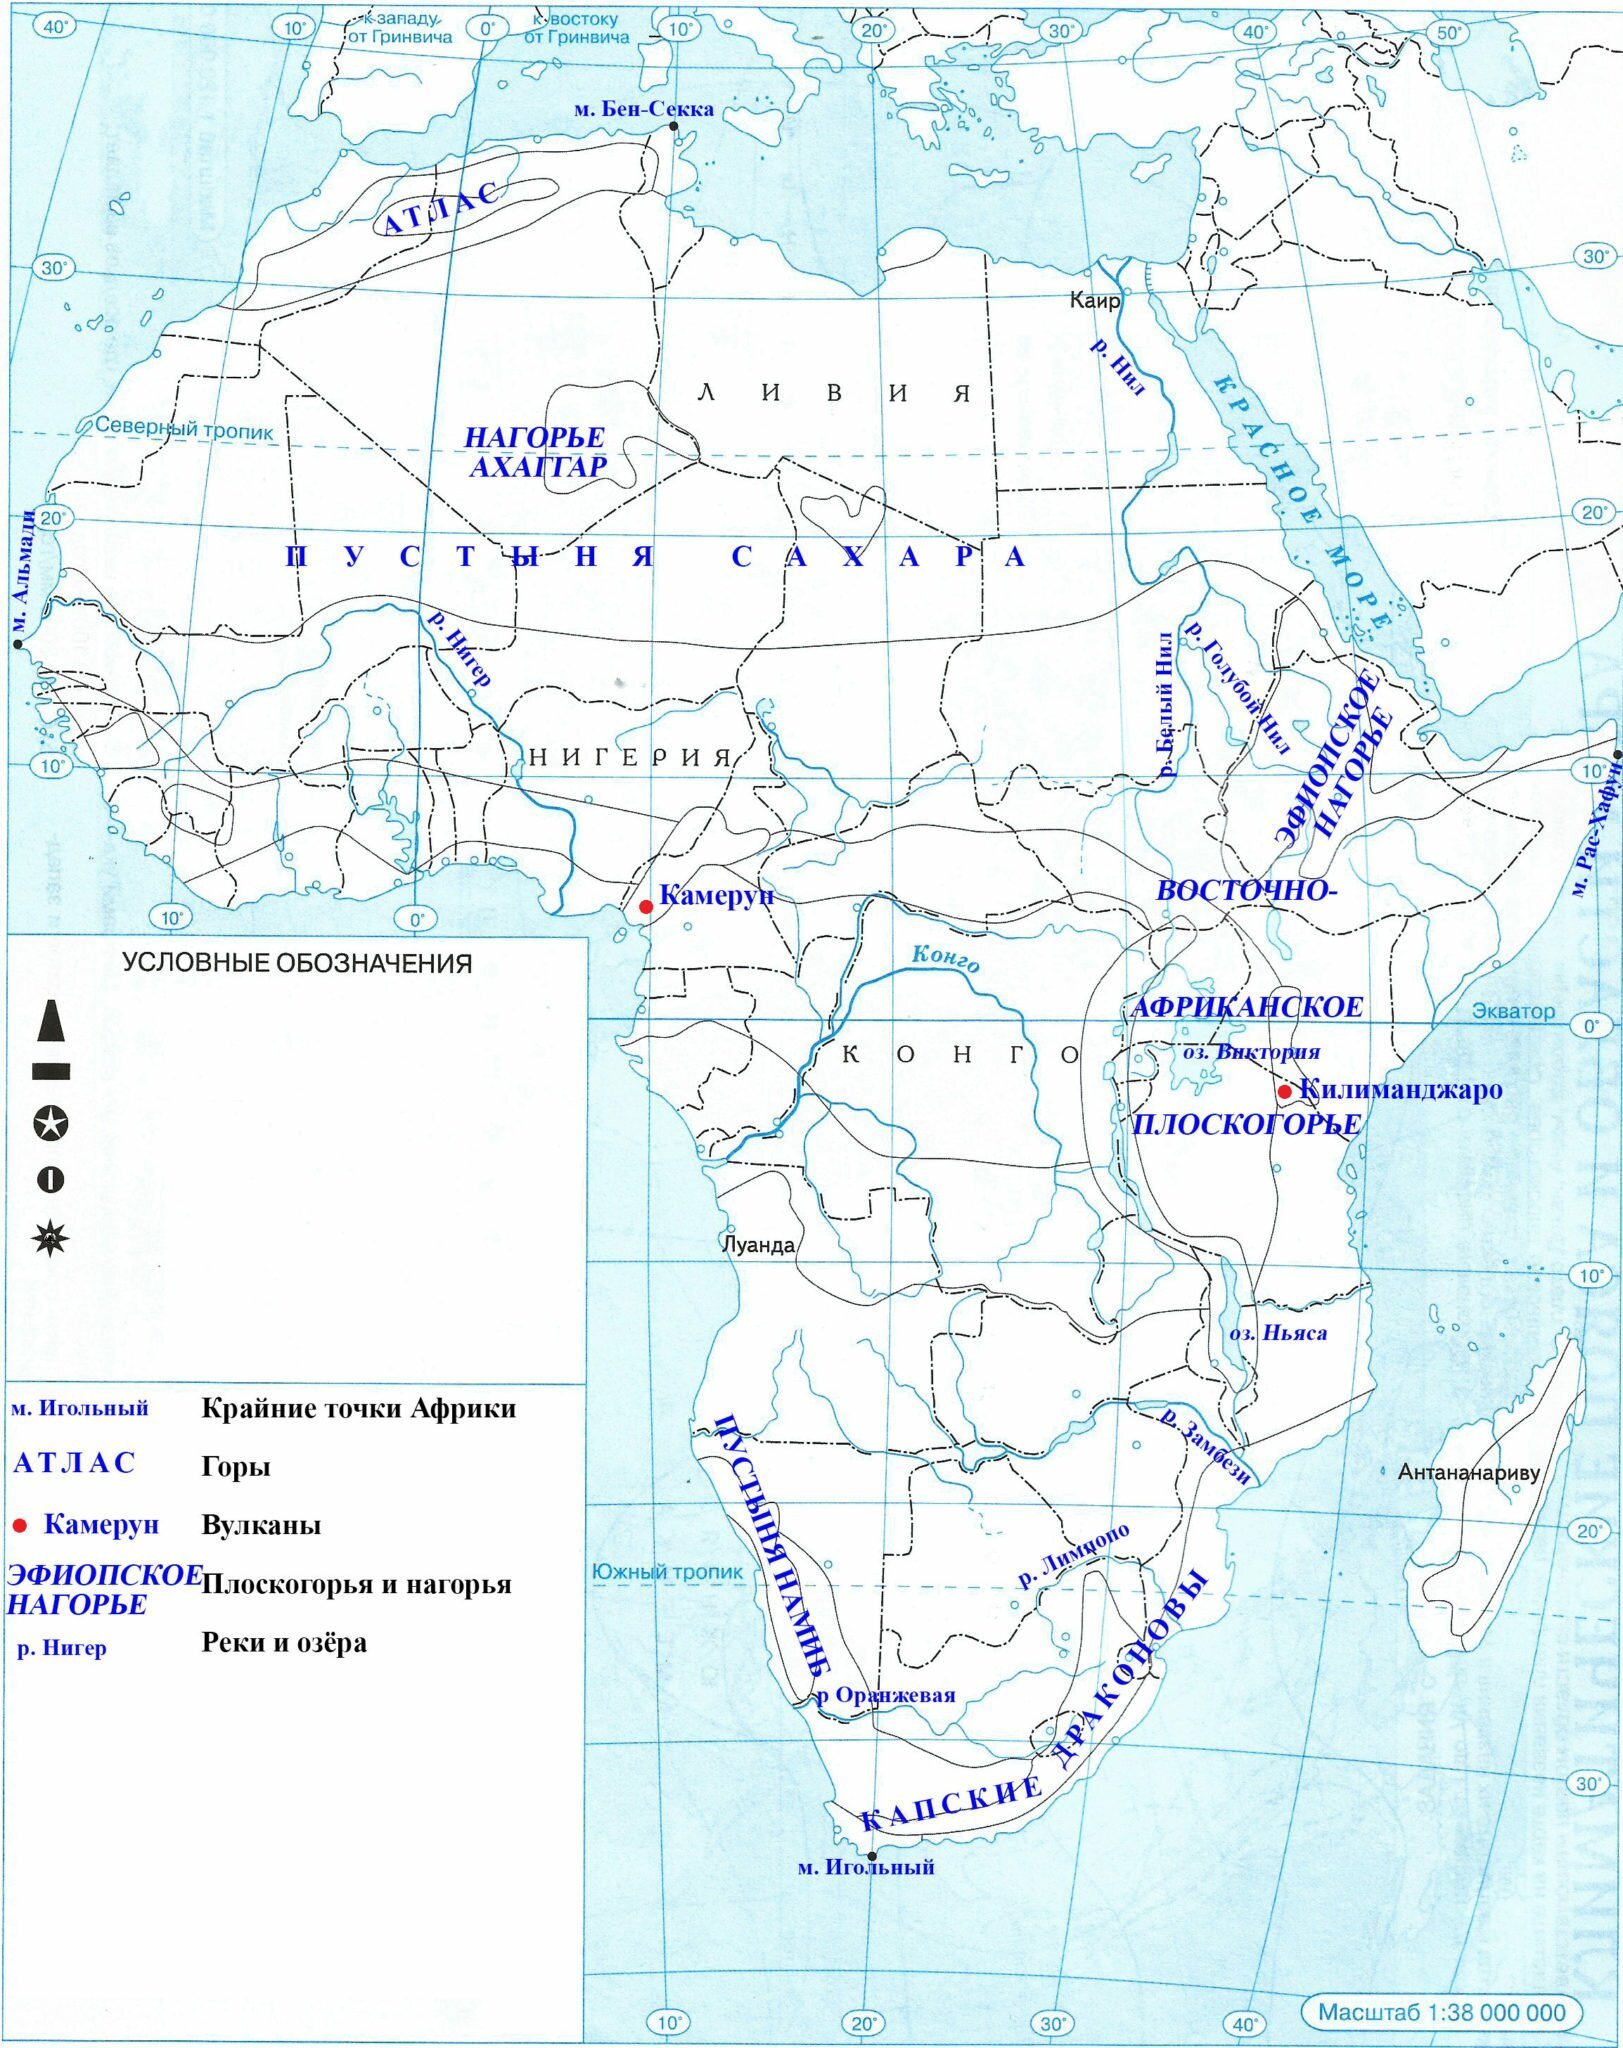 Контурная карта 7 класс страница 16. Африка физическая карта 7 класс контурные карты. Контурная карта по географии Африка. Реки Африки на контурной карте 7 класс. Контурная карта география 7 кл. Африка.